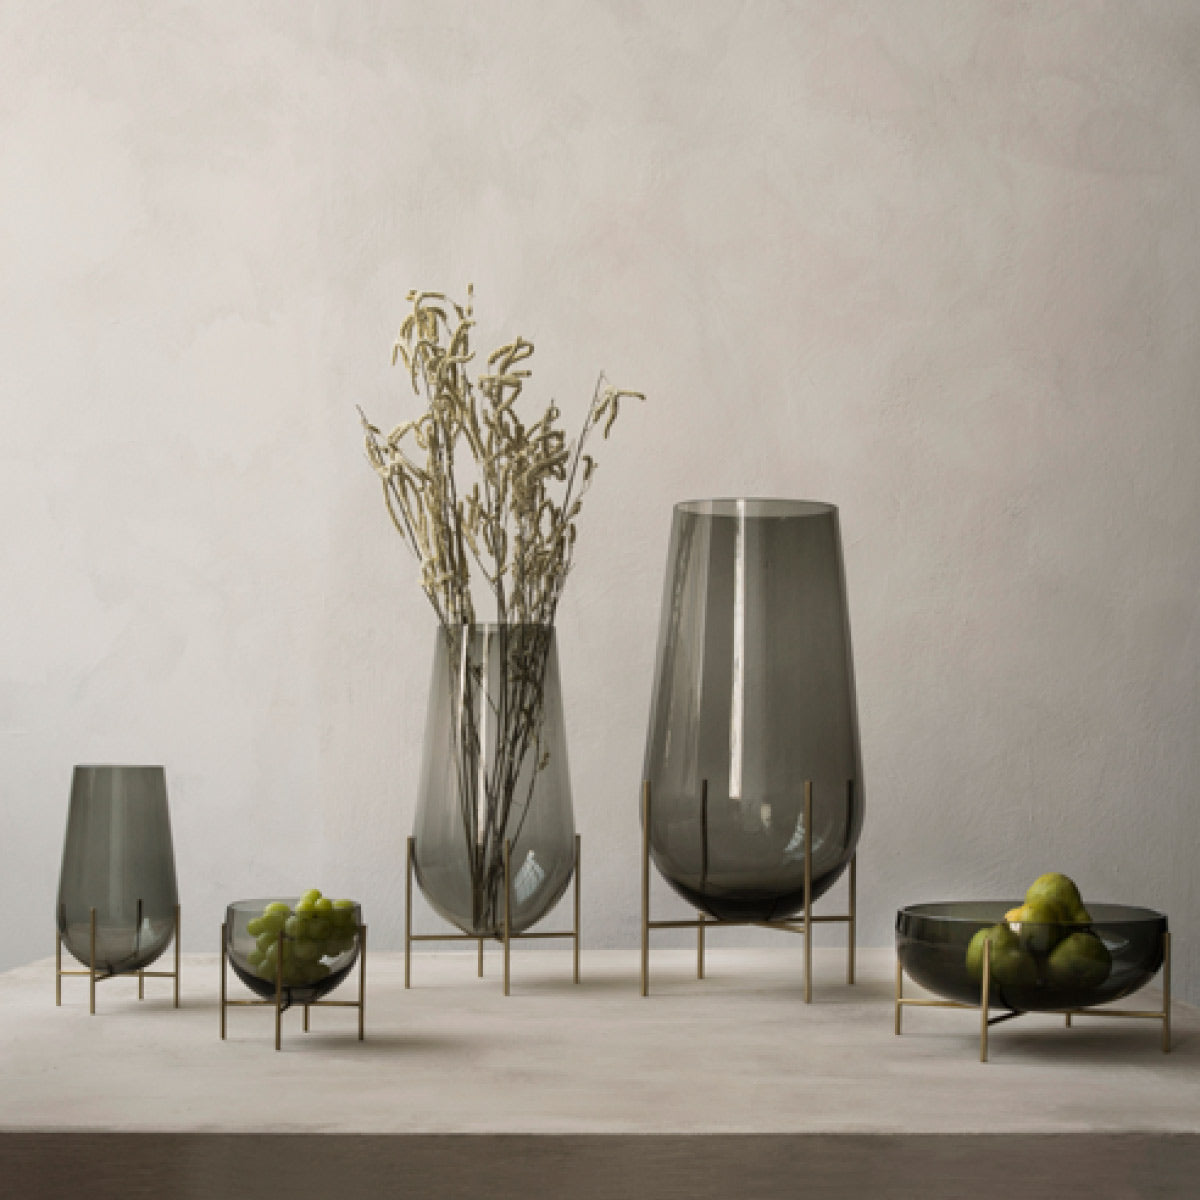 Menu, Echasse Vase, Medium, Smoke by Theresa Rand